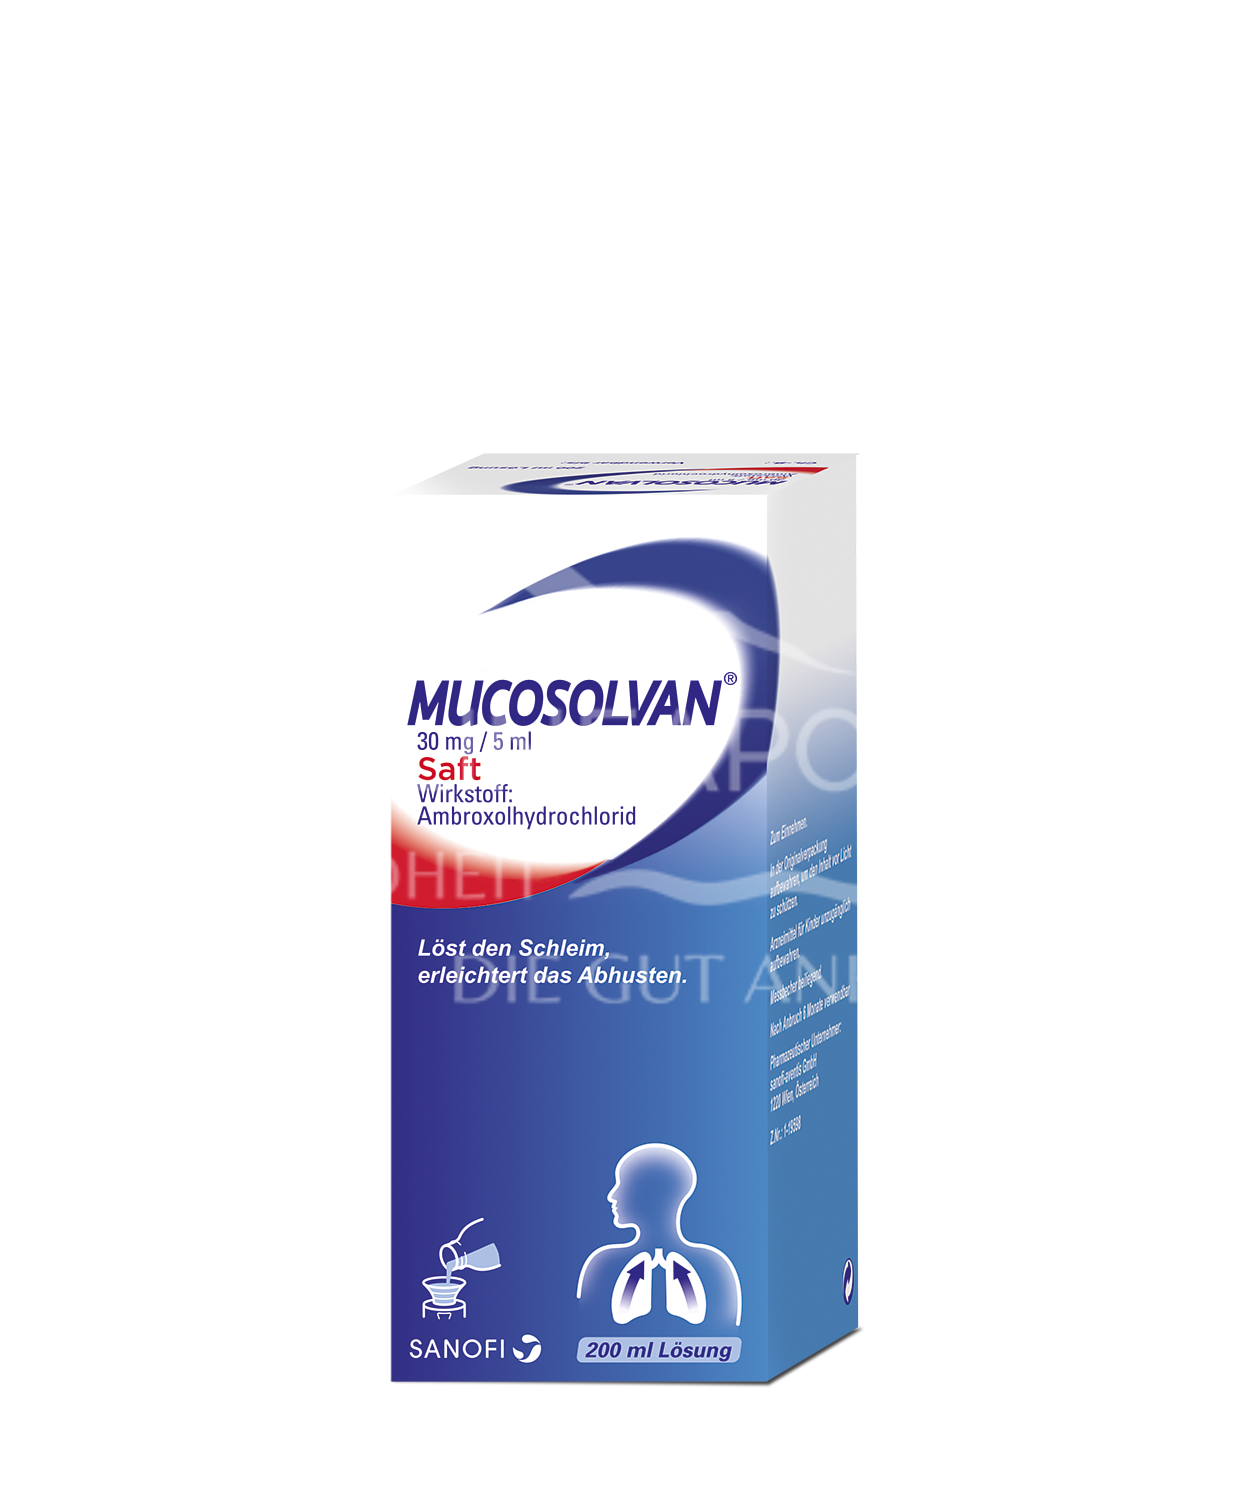 Mucosolvan® 30 mg/5 ml - Saft